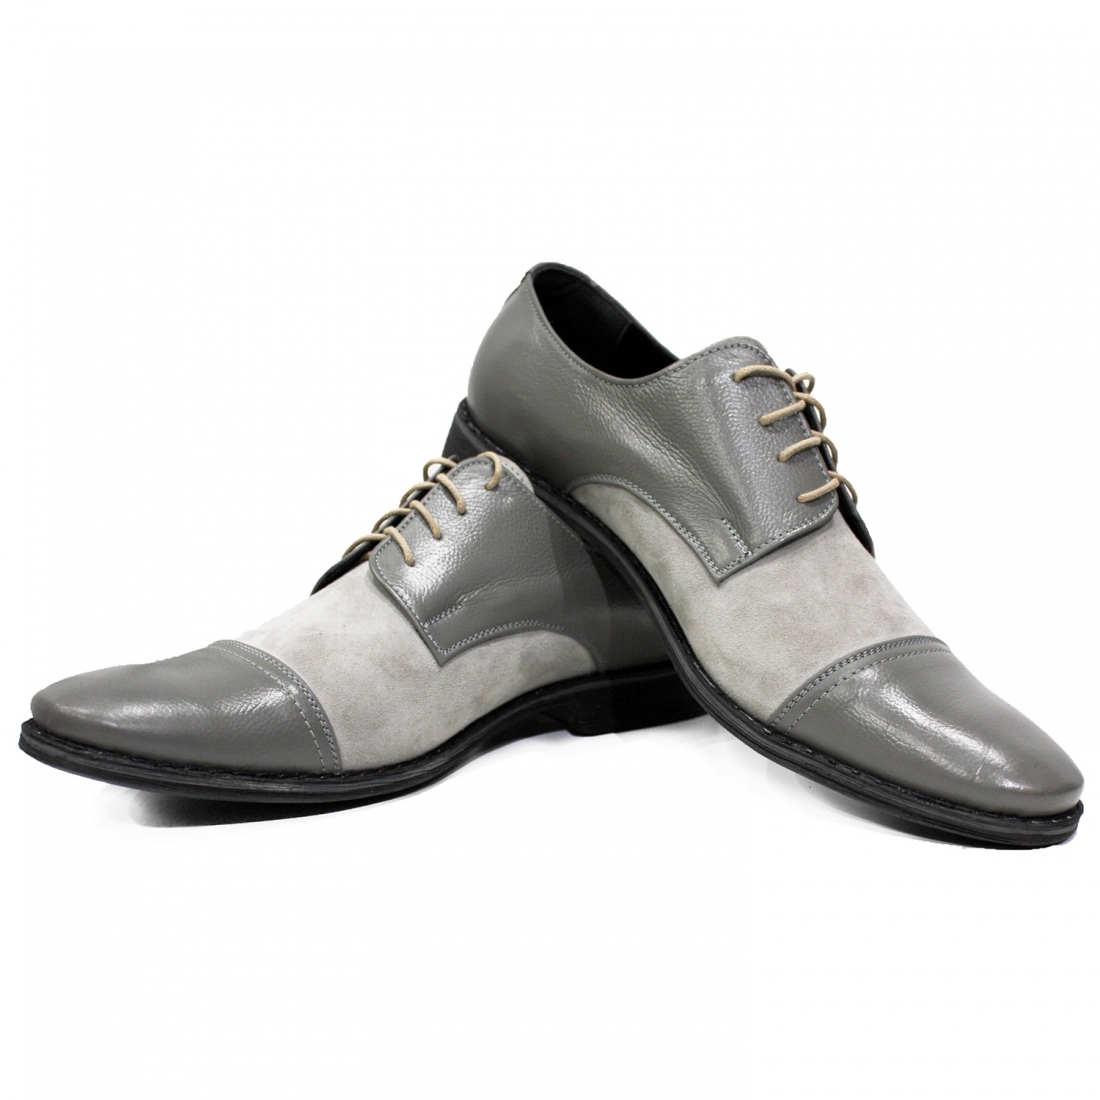 Modello Nuizzerro - Buty Klasyczne - Handmade Colorful Italian Leather Shoes